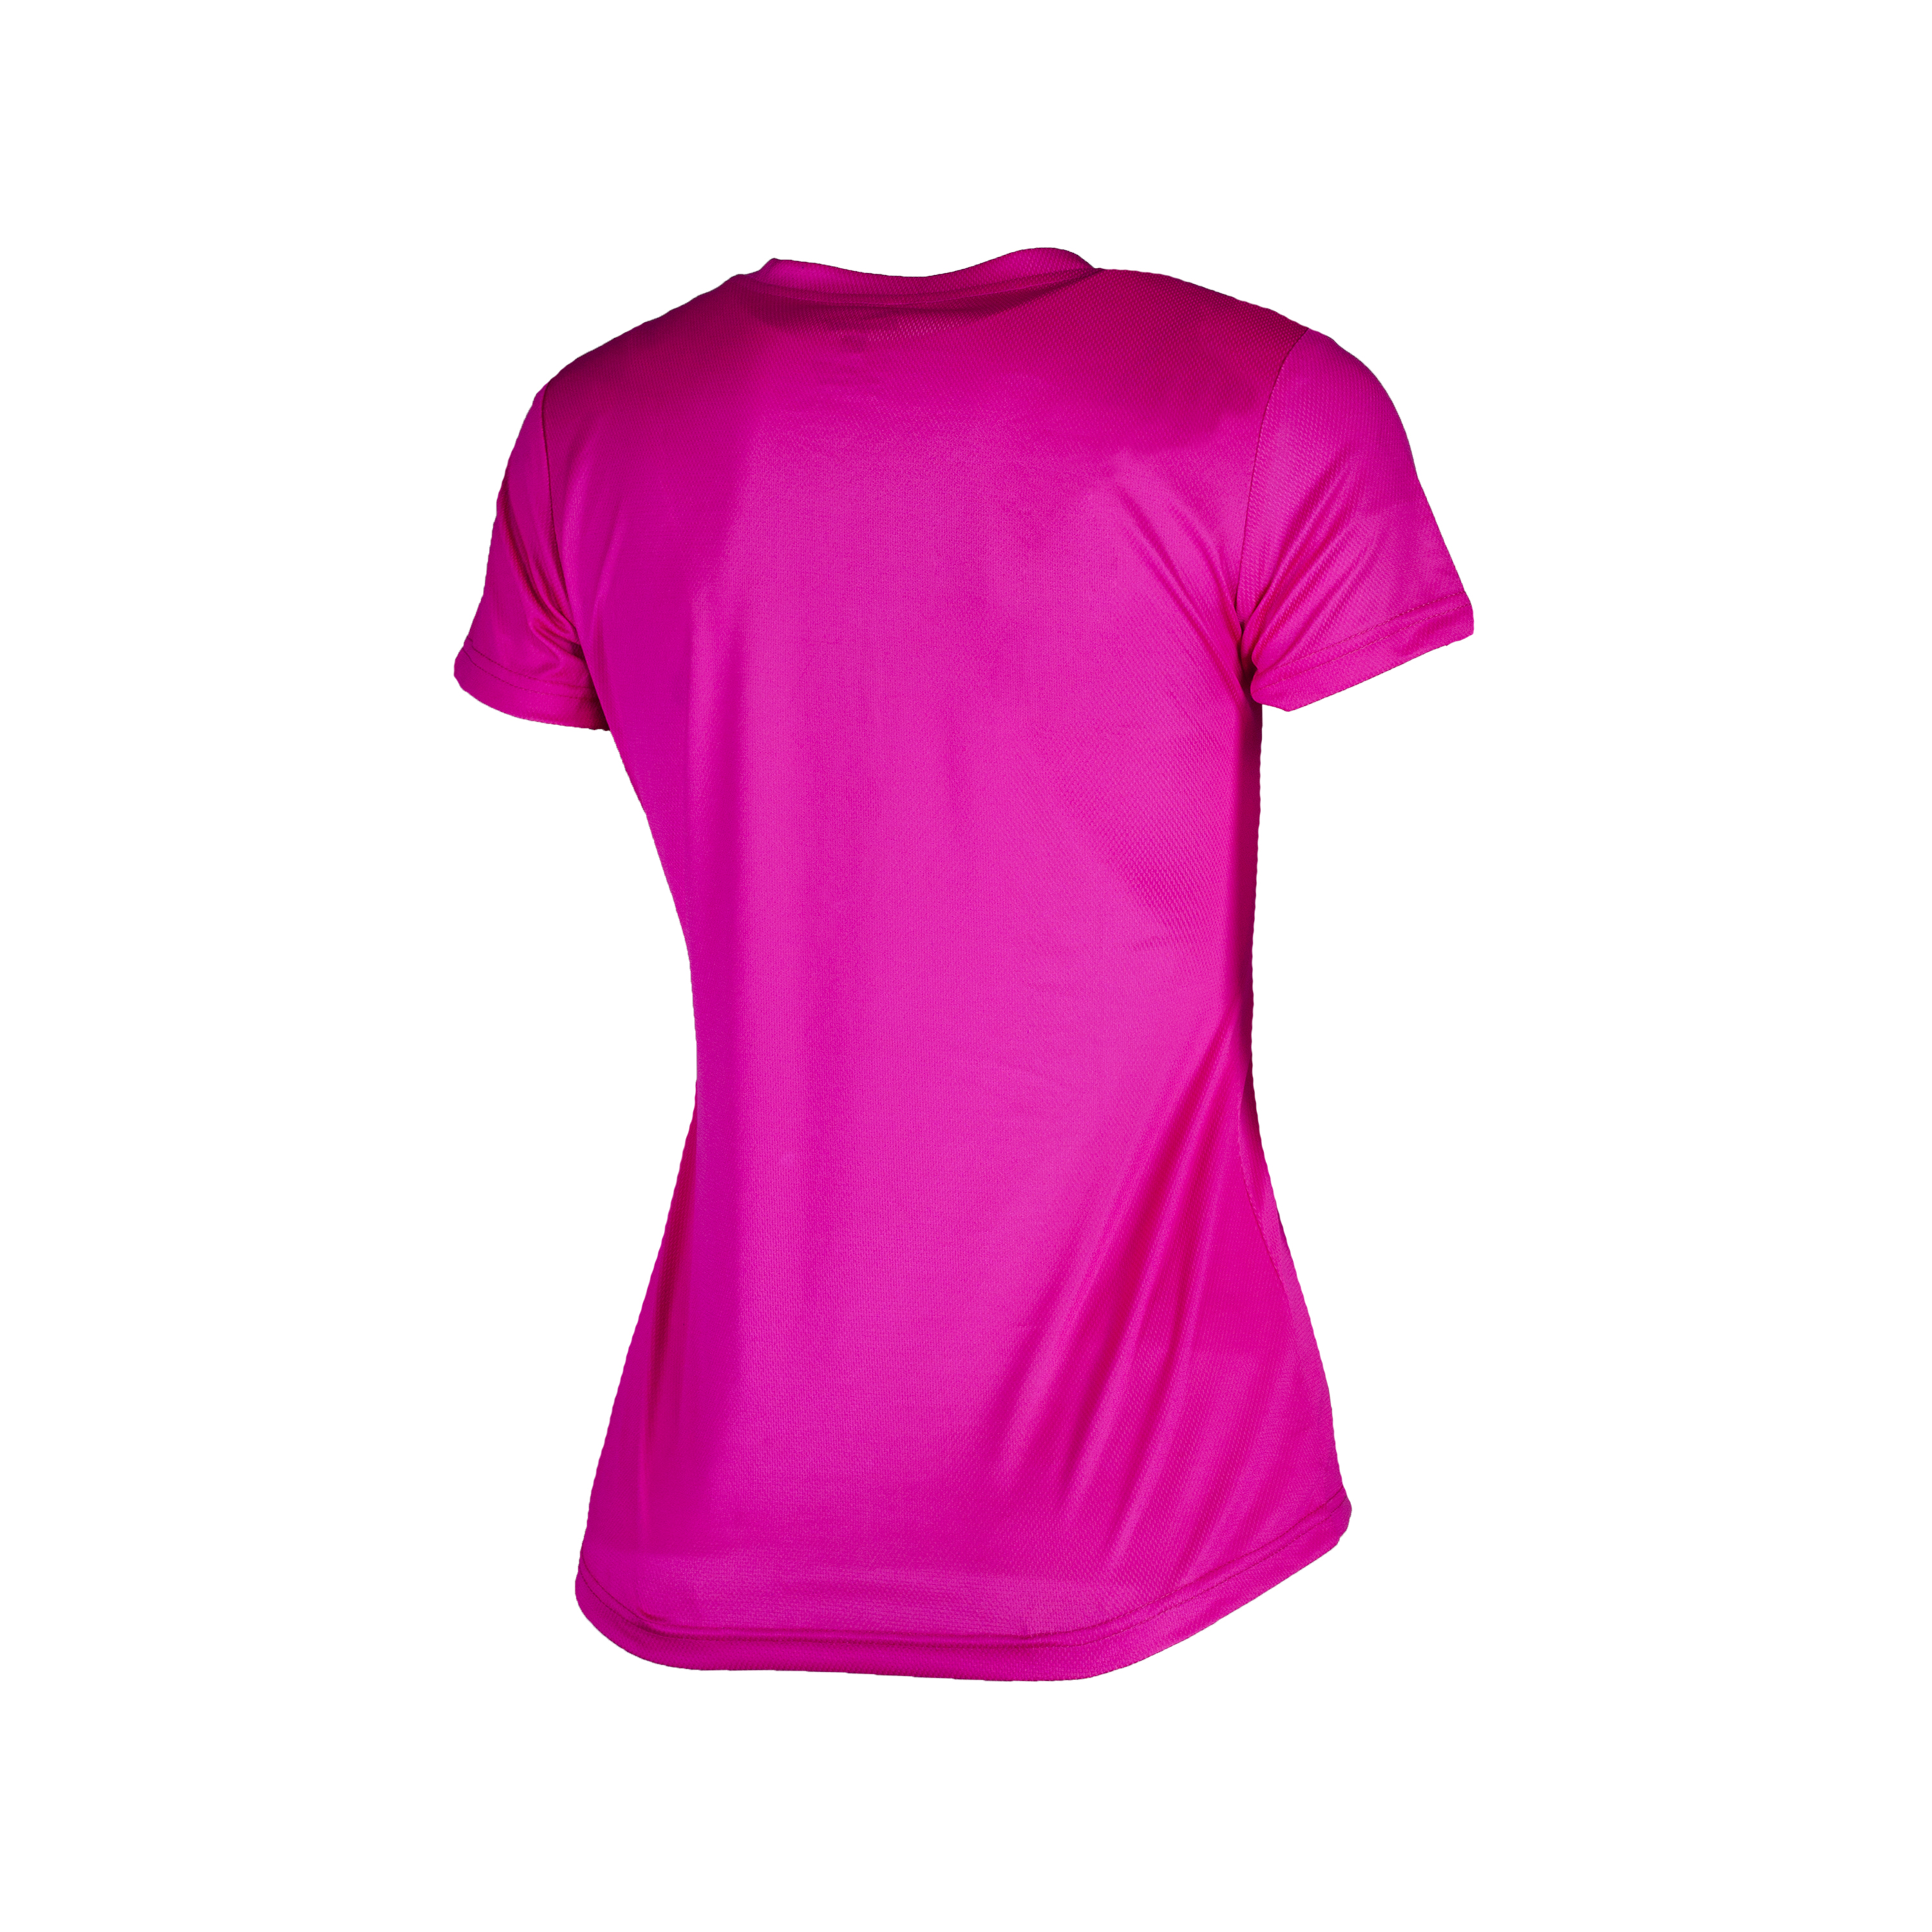 Promo Hardloopshirt Dames Roze